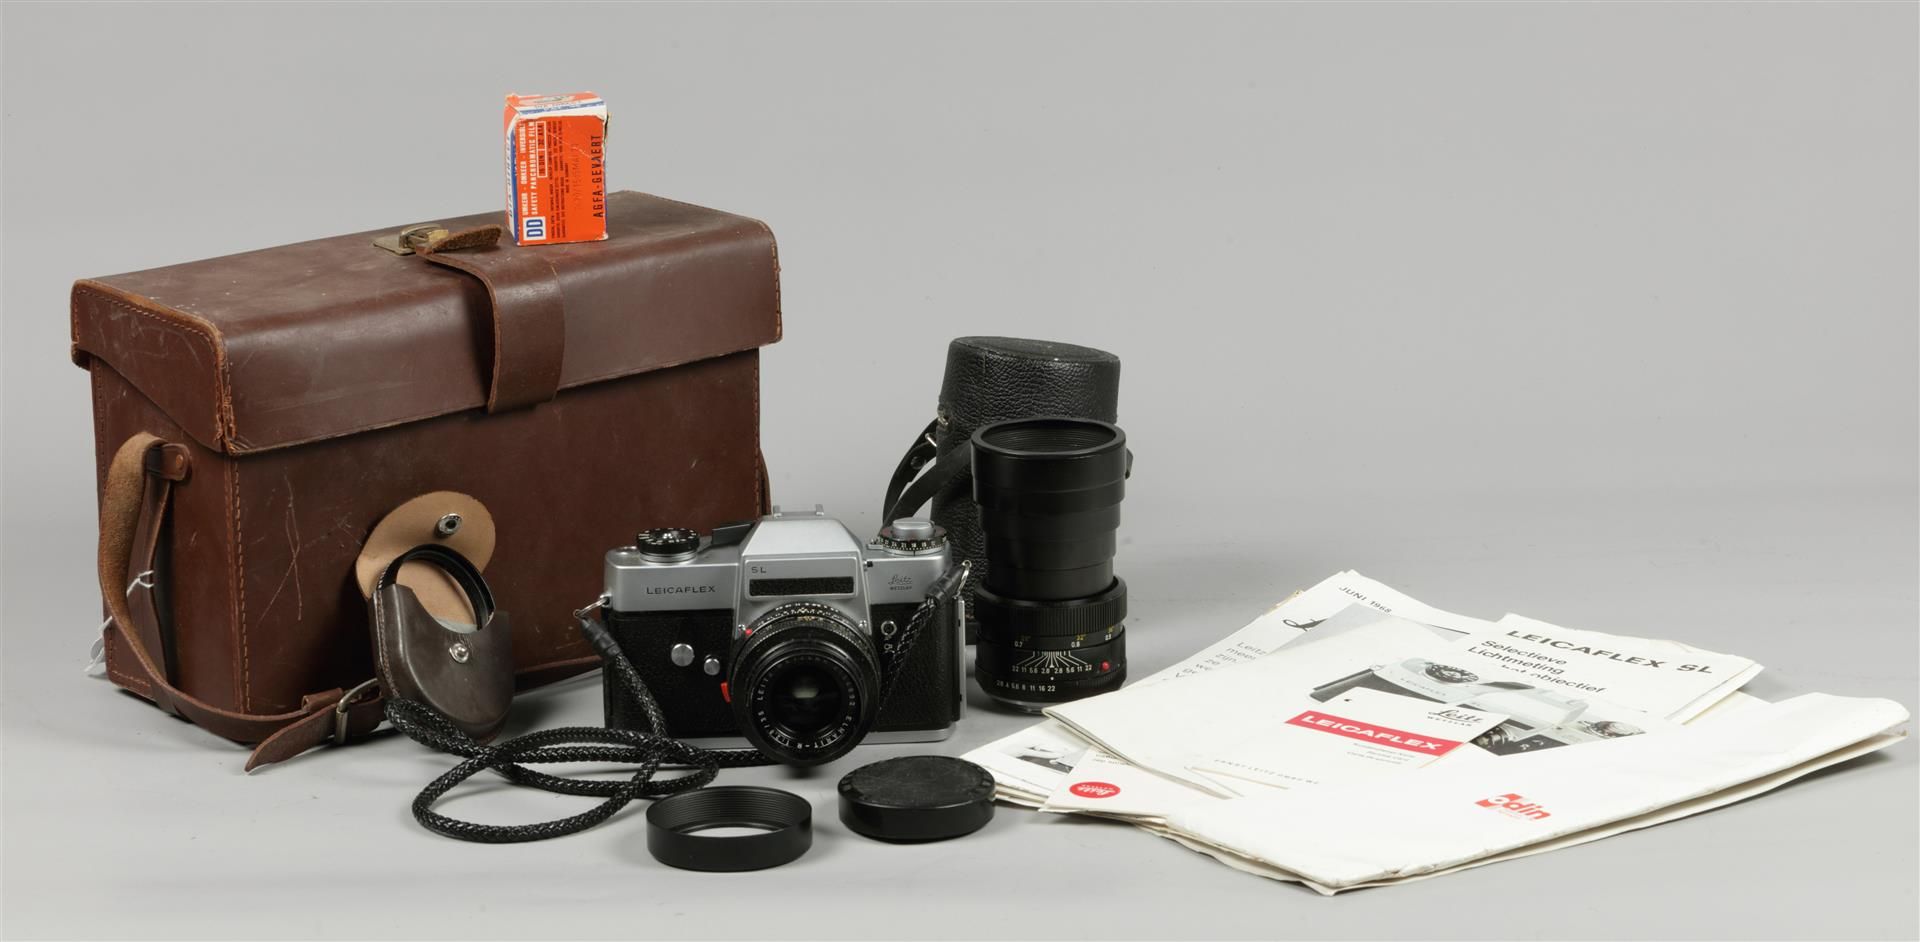 Leicaflex SL 35mm film SLR analog camera, by Ernst Leitz We